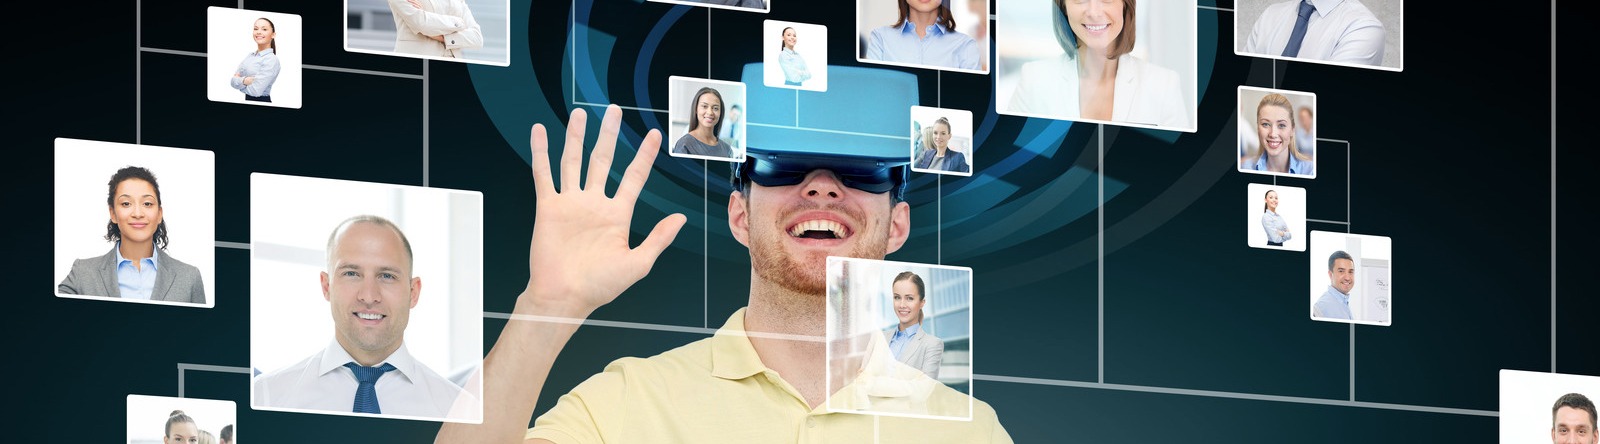 Man enjoying Virtual Reality headset